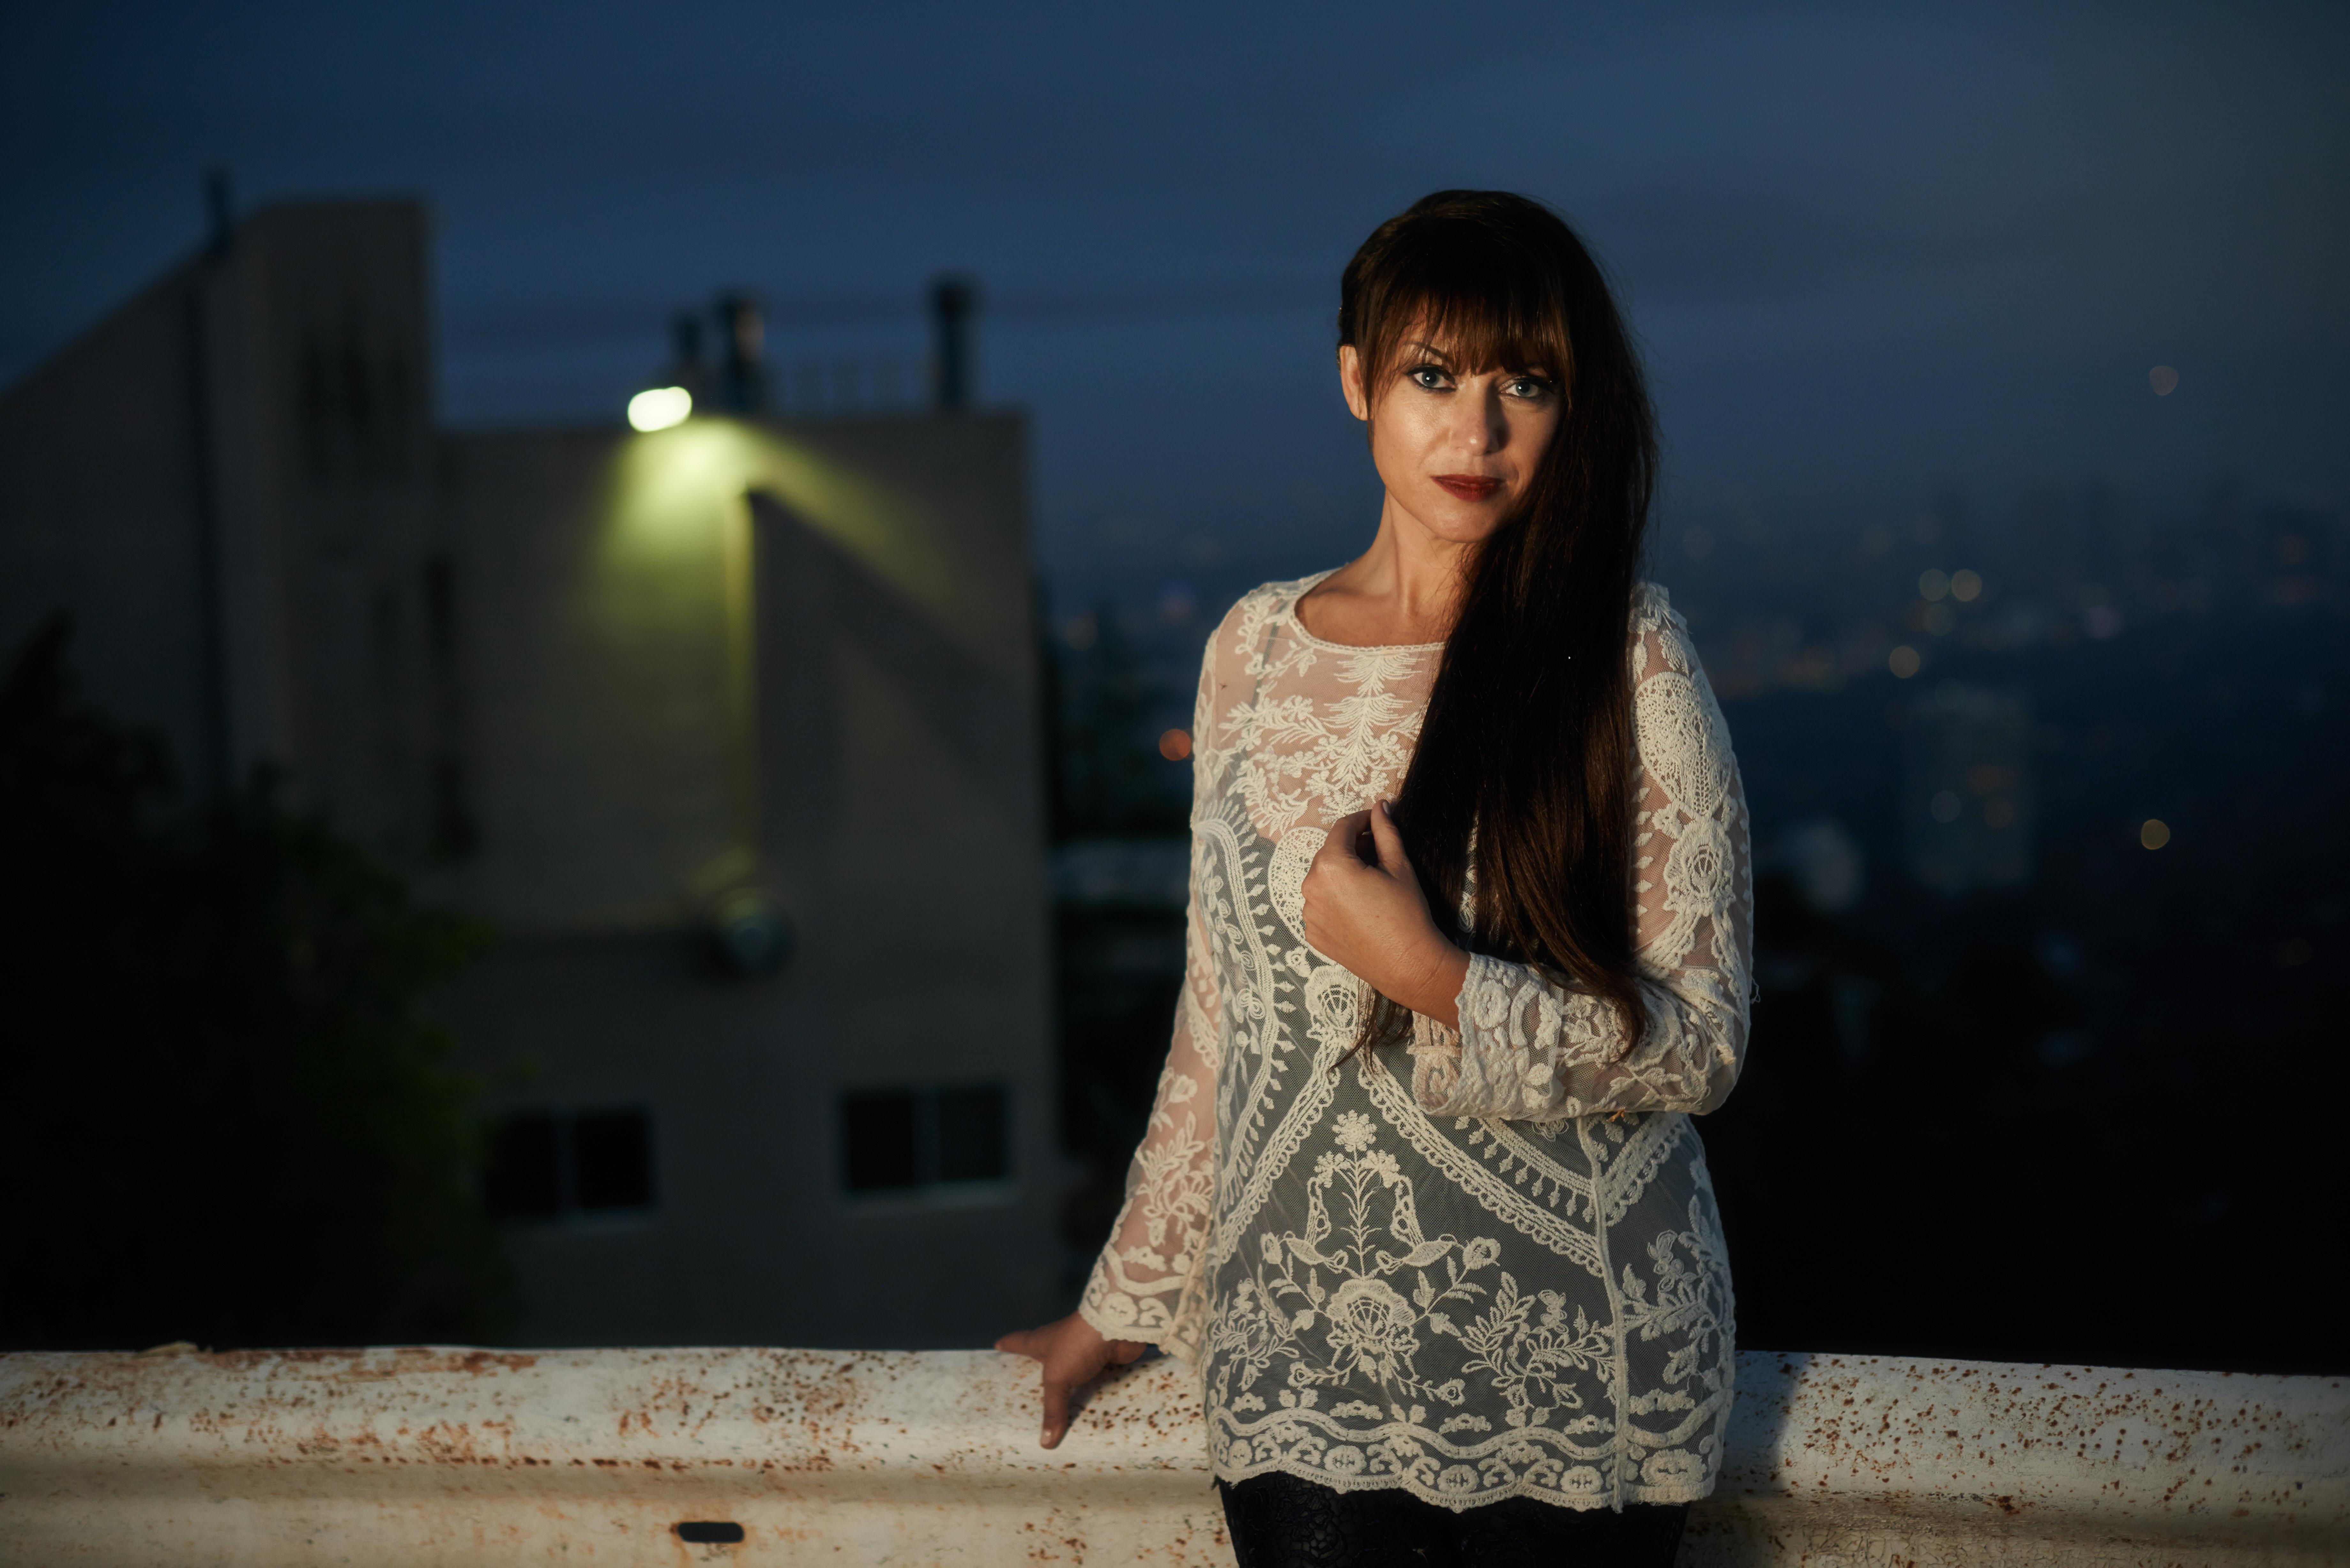 Night Shoot with Michael Becker 2014 Hollywood Hills, Kali Nolen Featured, Singer/Actress/Model